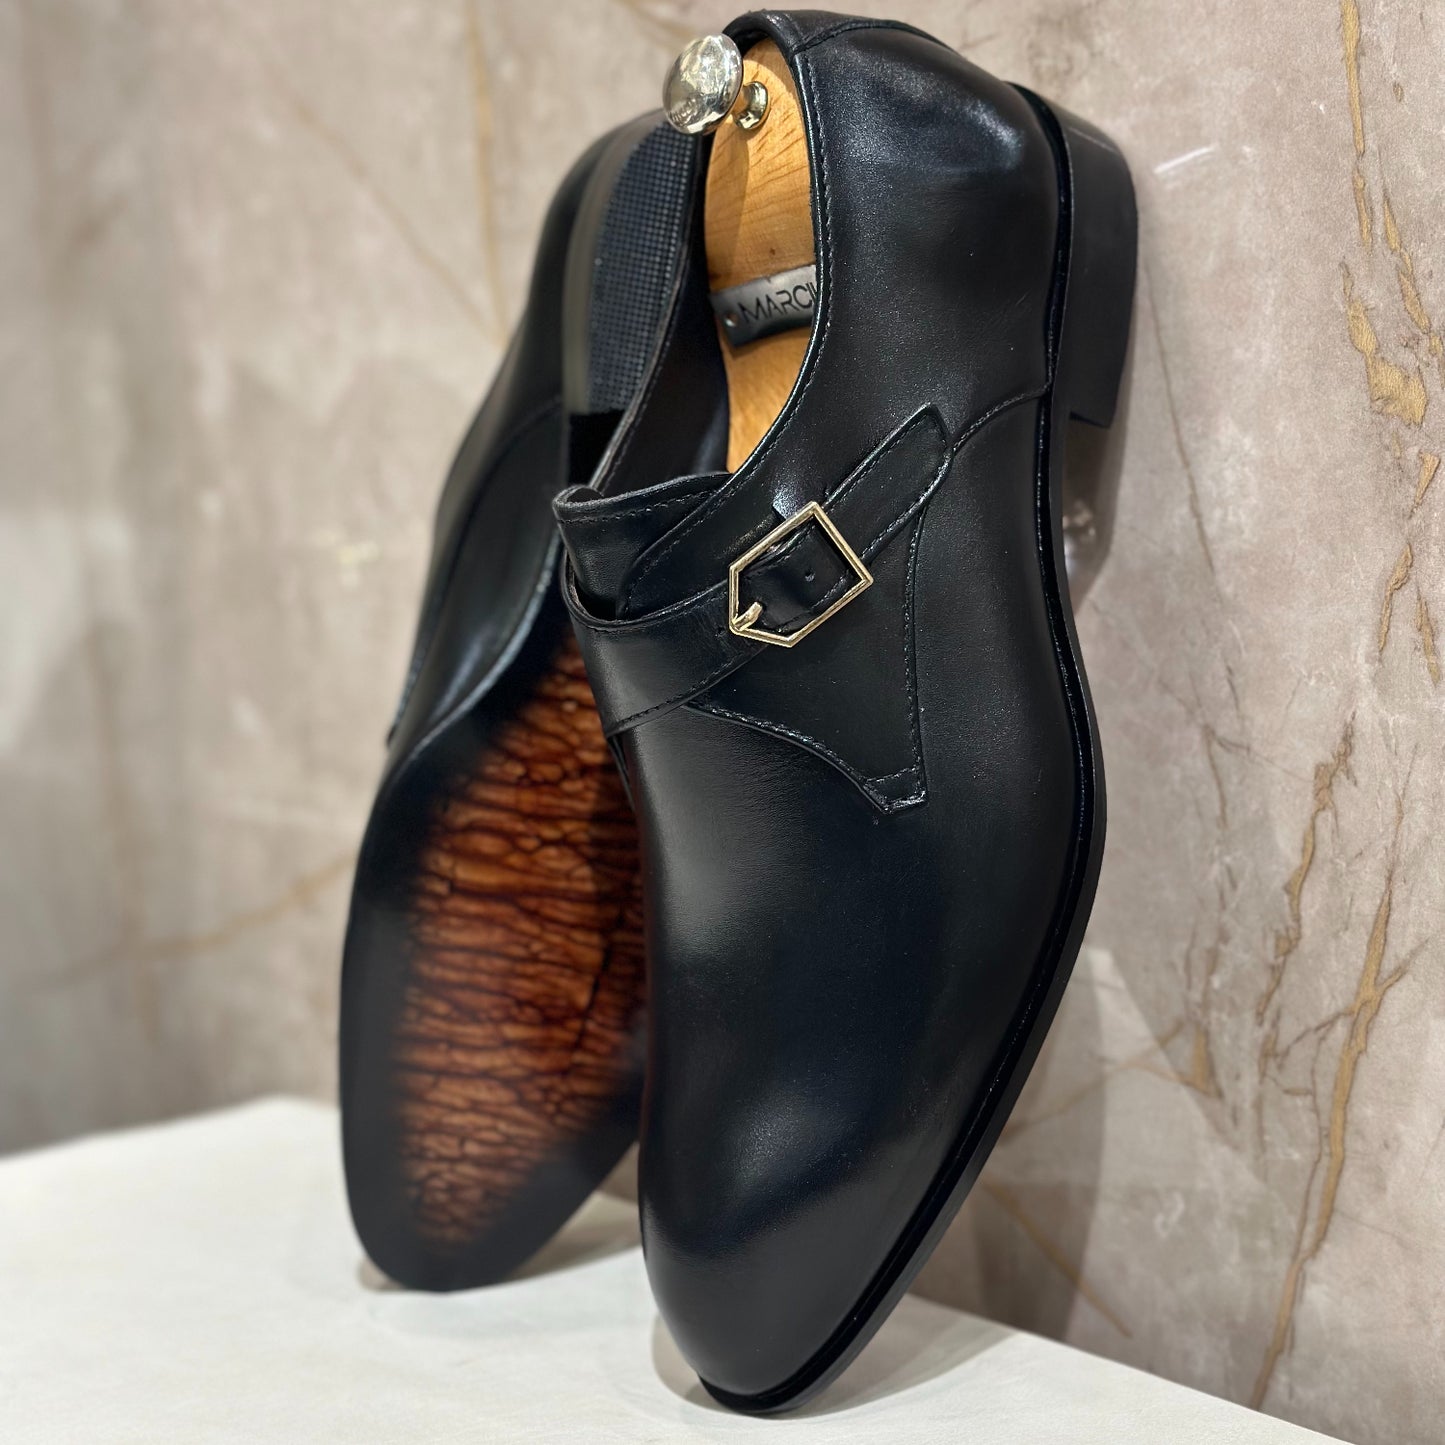 Black Single Monk Shoes